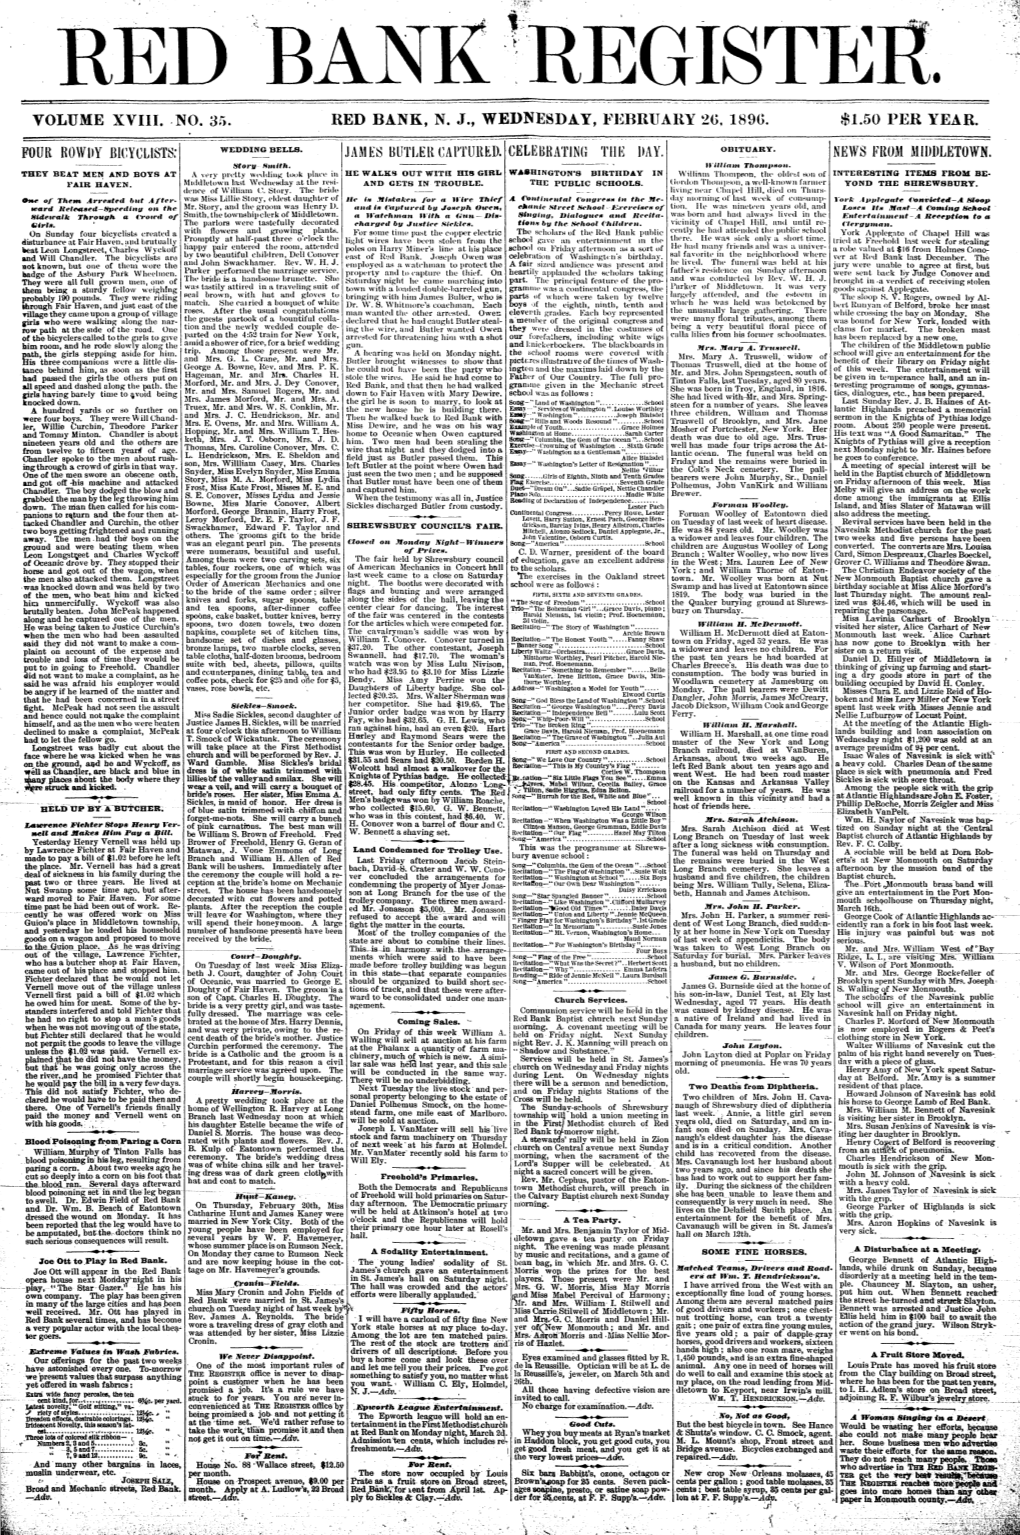 Wednesday, February 26, 1890. $1,50 Per Year, Four Rowdy